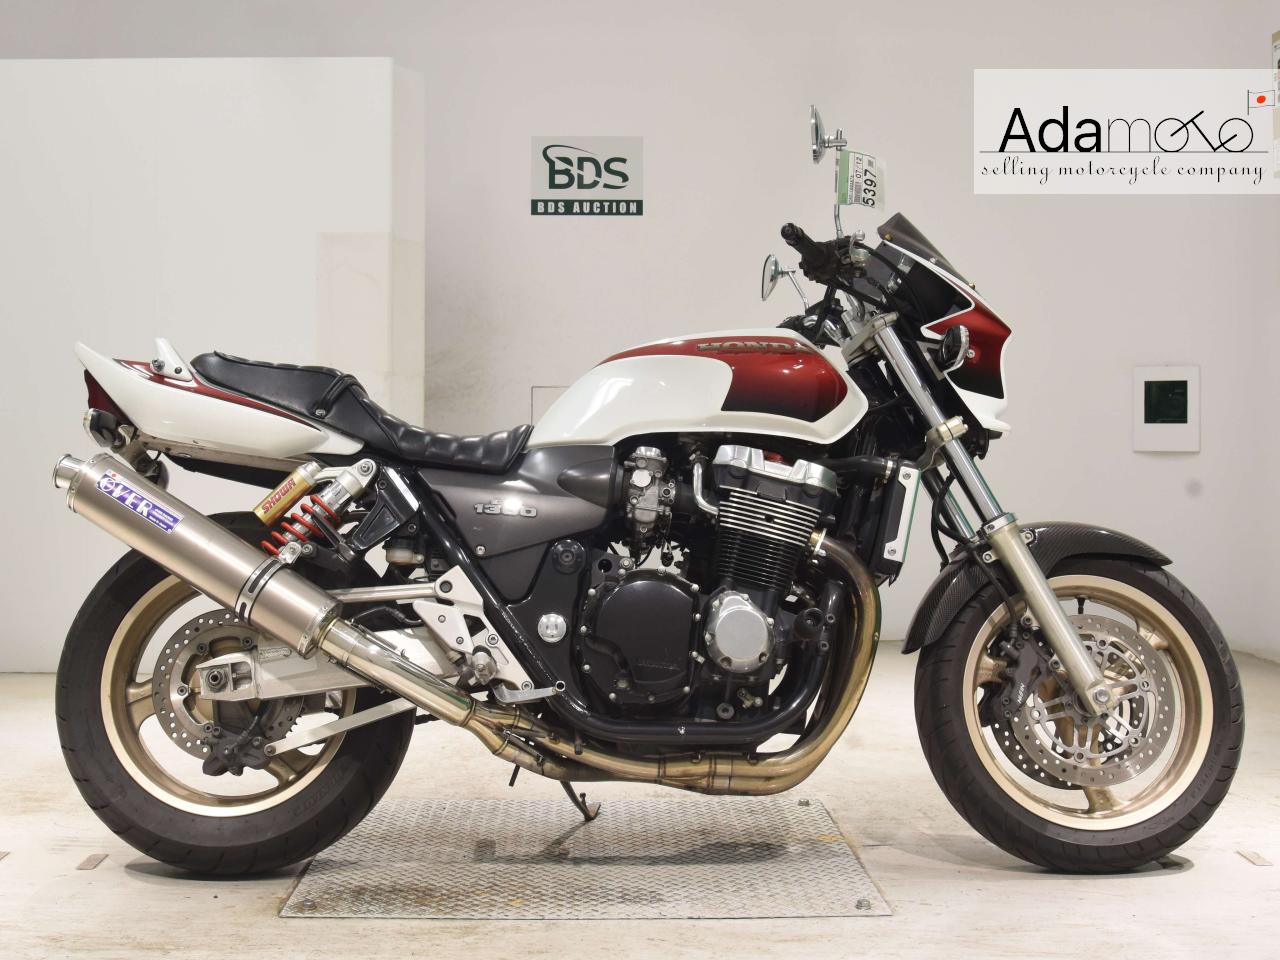 Honda CB1300SF - Adamoto - Motorcycles from Japan